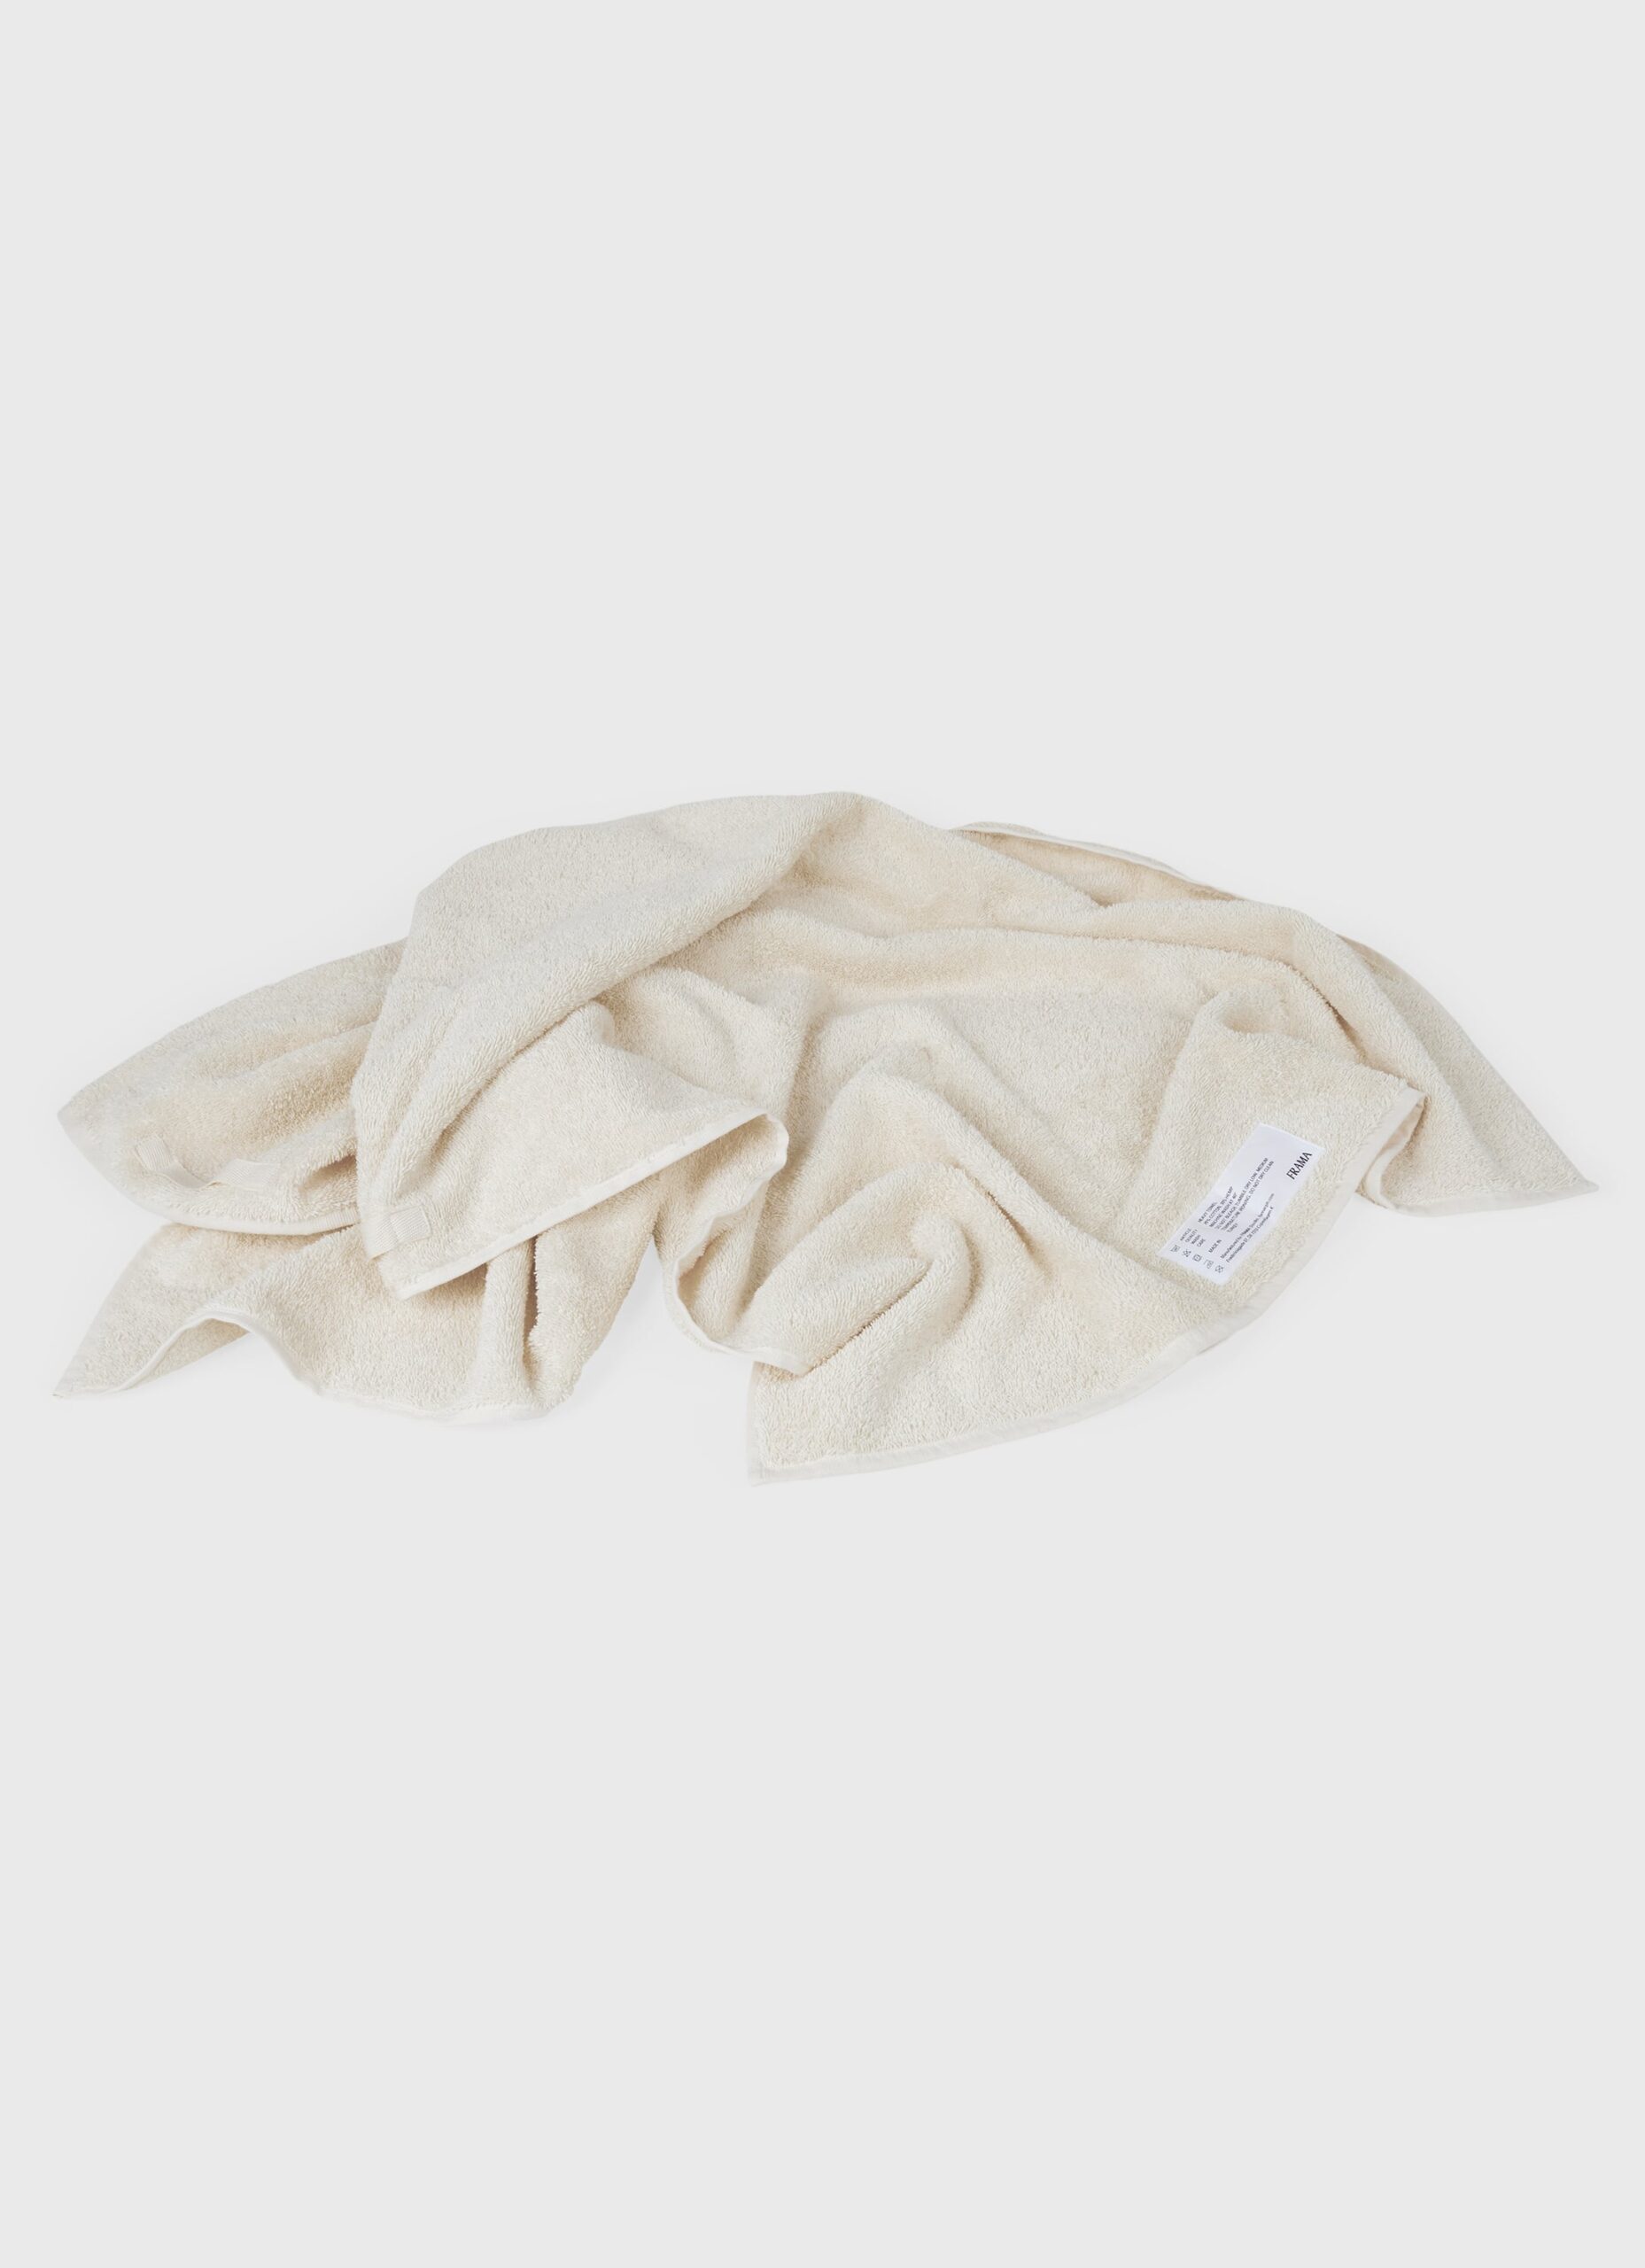 Frama - Heavy Towel - Bone White - Bath Towel